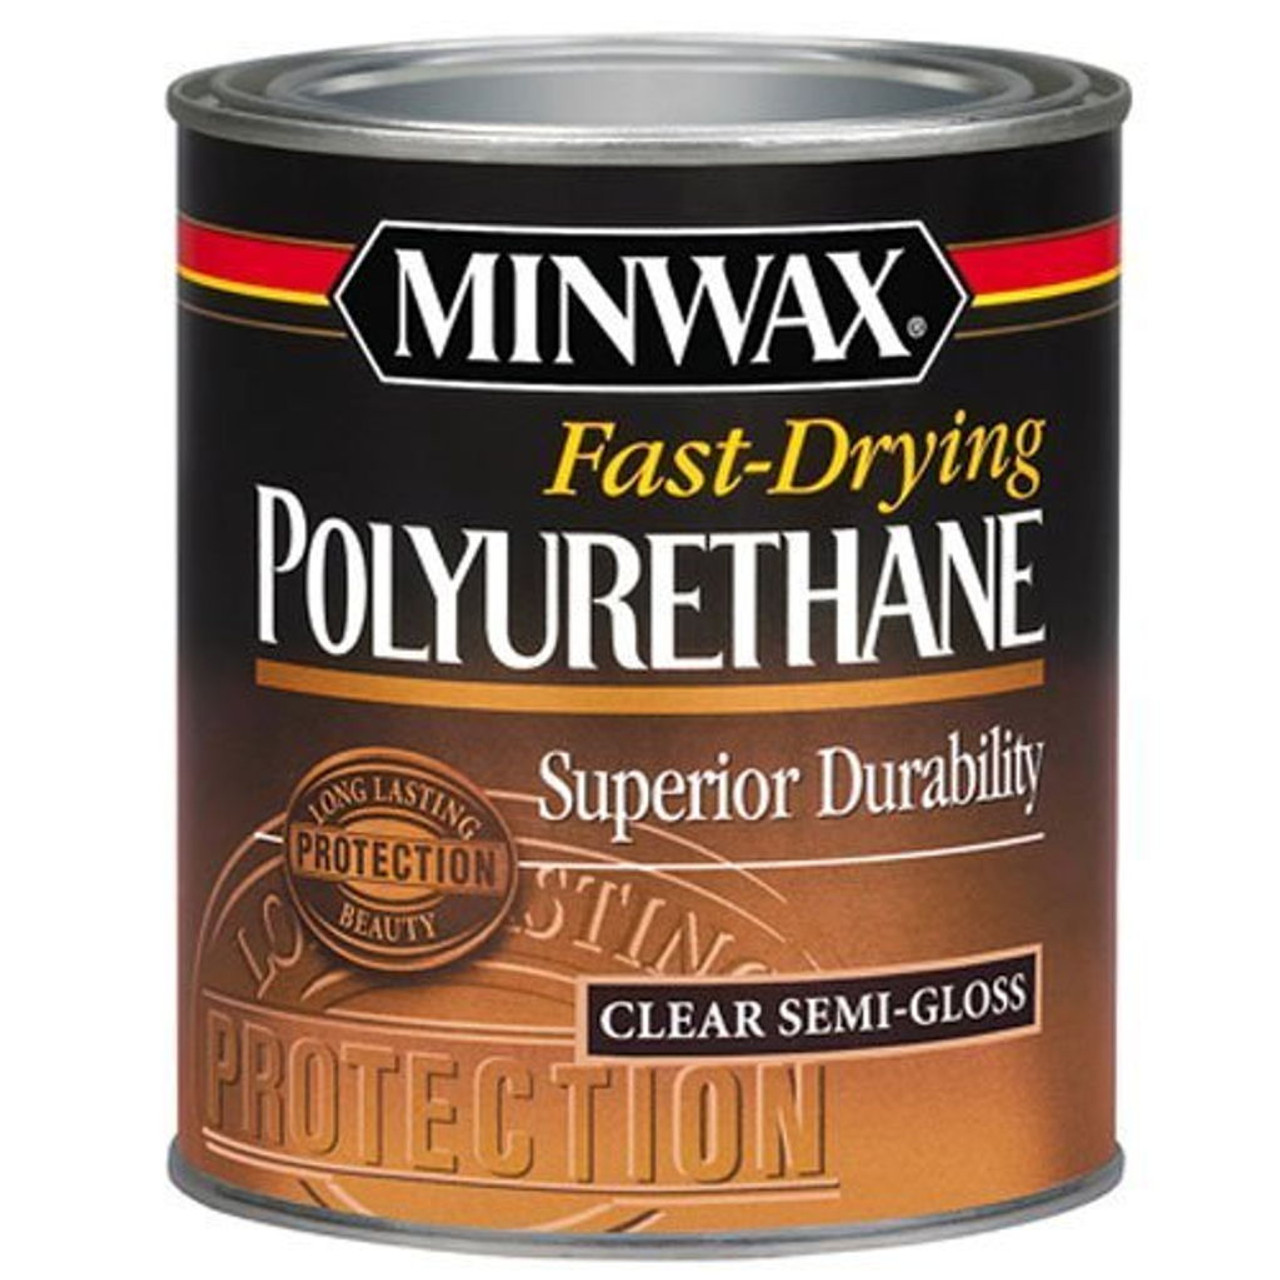 Minwax Fast Drying Polyurethane Spray, Protective Wood Finish